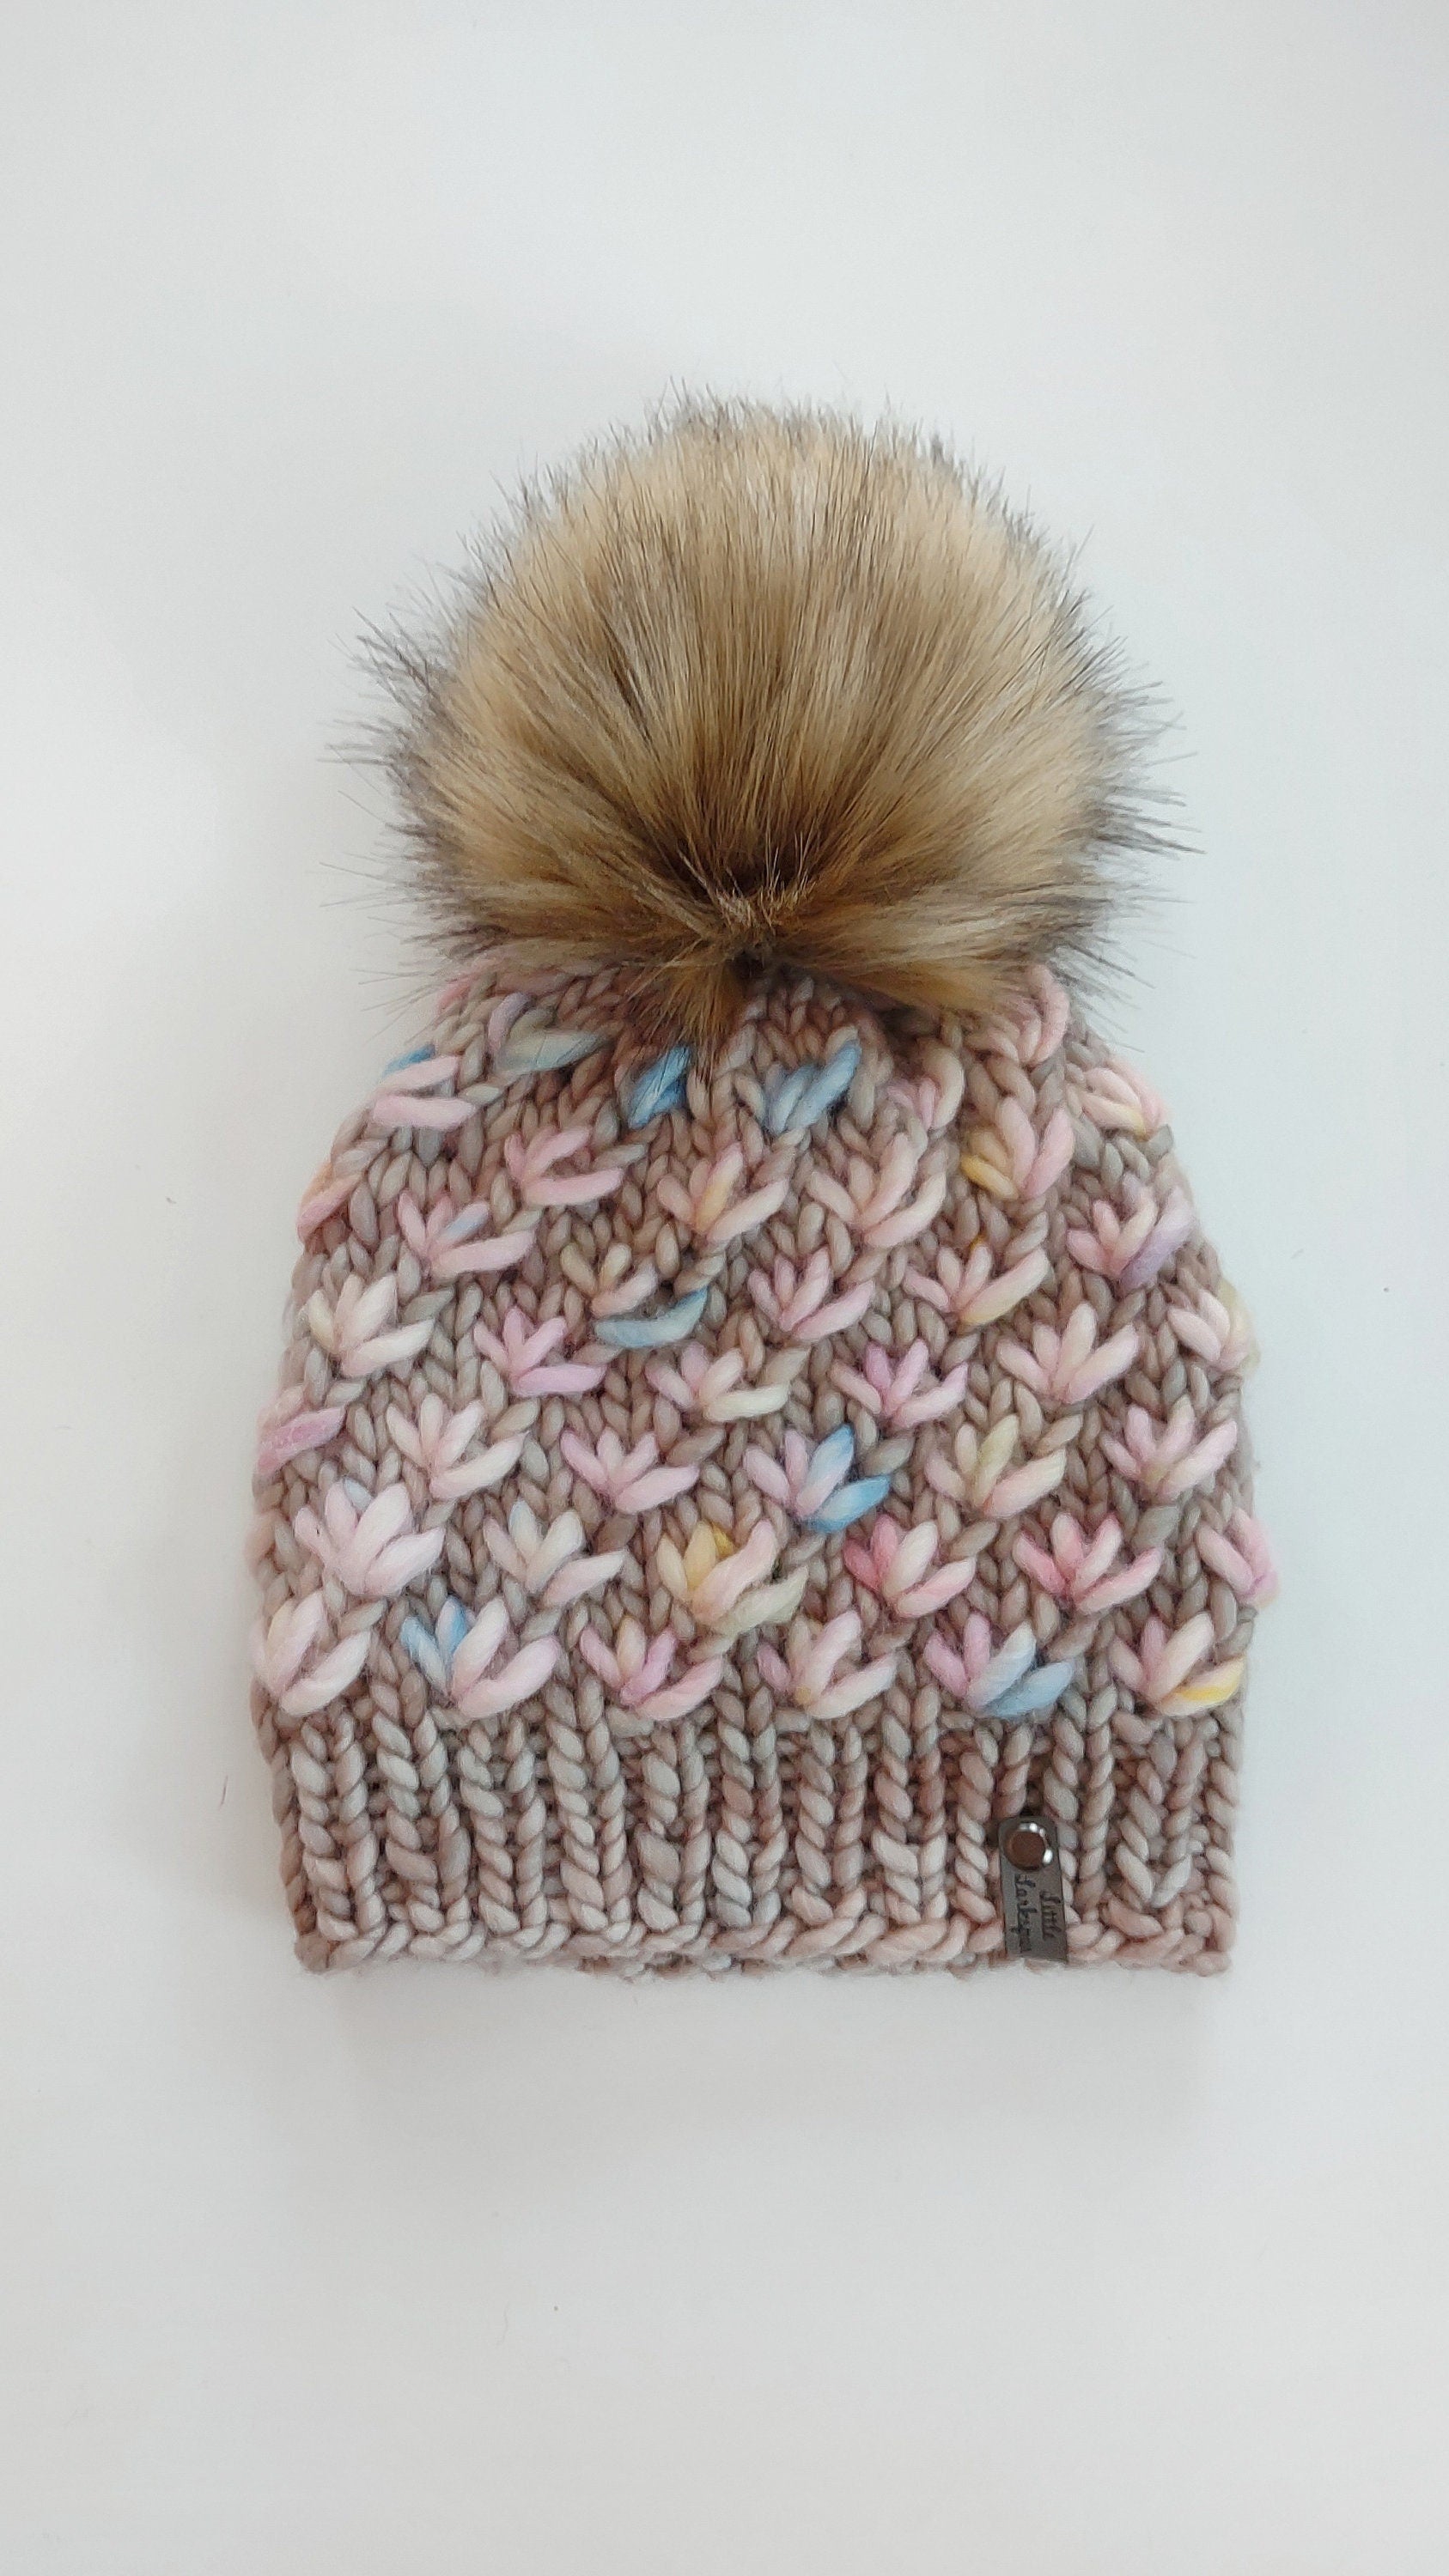 Handknit Adult Hat w/ Faux Fur Pom Pom. 100% Merino Wool. Lotus Flower Beanie. Mocha Warm Colors with Pink Pastels. Super Soft Winter Hat.